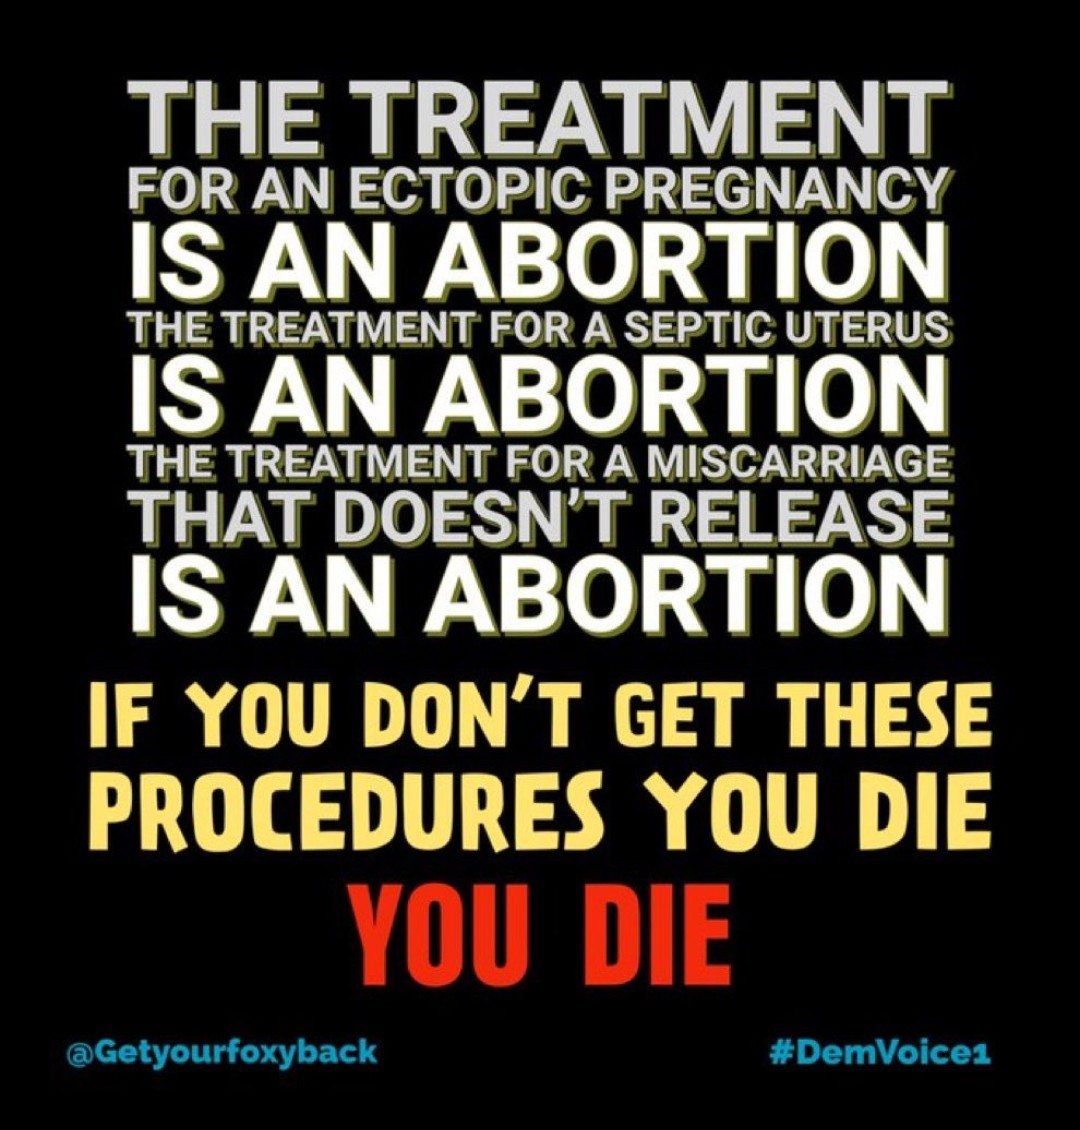 #ForcedPregnancyInAmerica #ForcedBirthInAmerica #AbortionIsHealthcare #WomensRights #HerChoice  #ReproductiveFREEDOM #ProtectYourselfVoteBLUE #MYBodyMYChoice  #fightforyourrights #TrumpDidThis